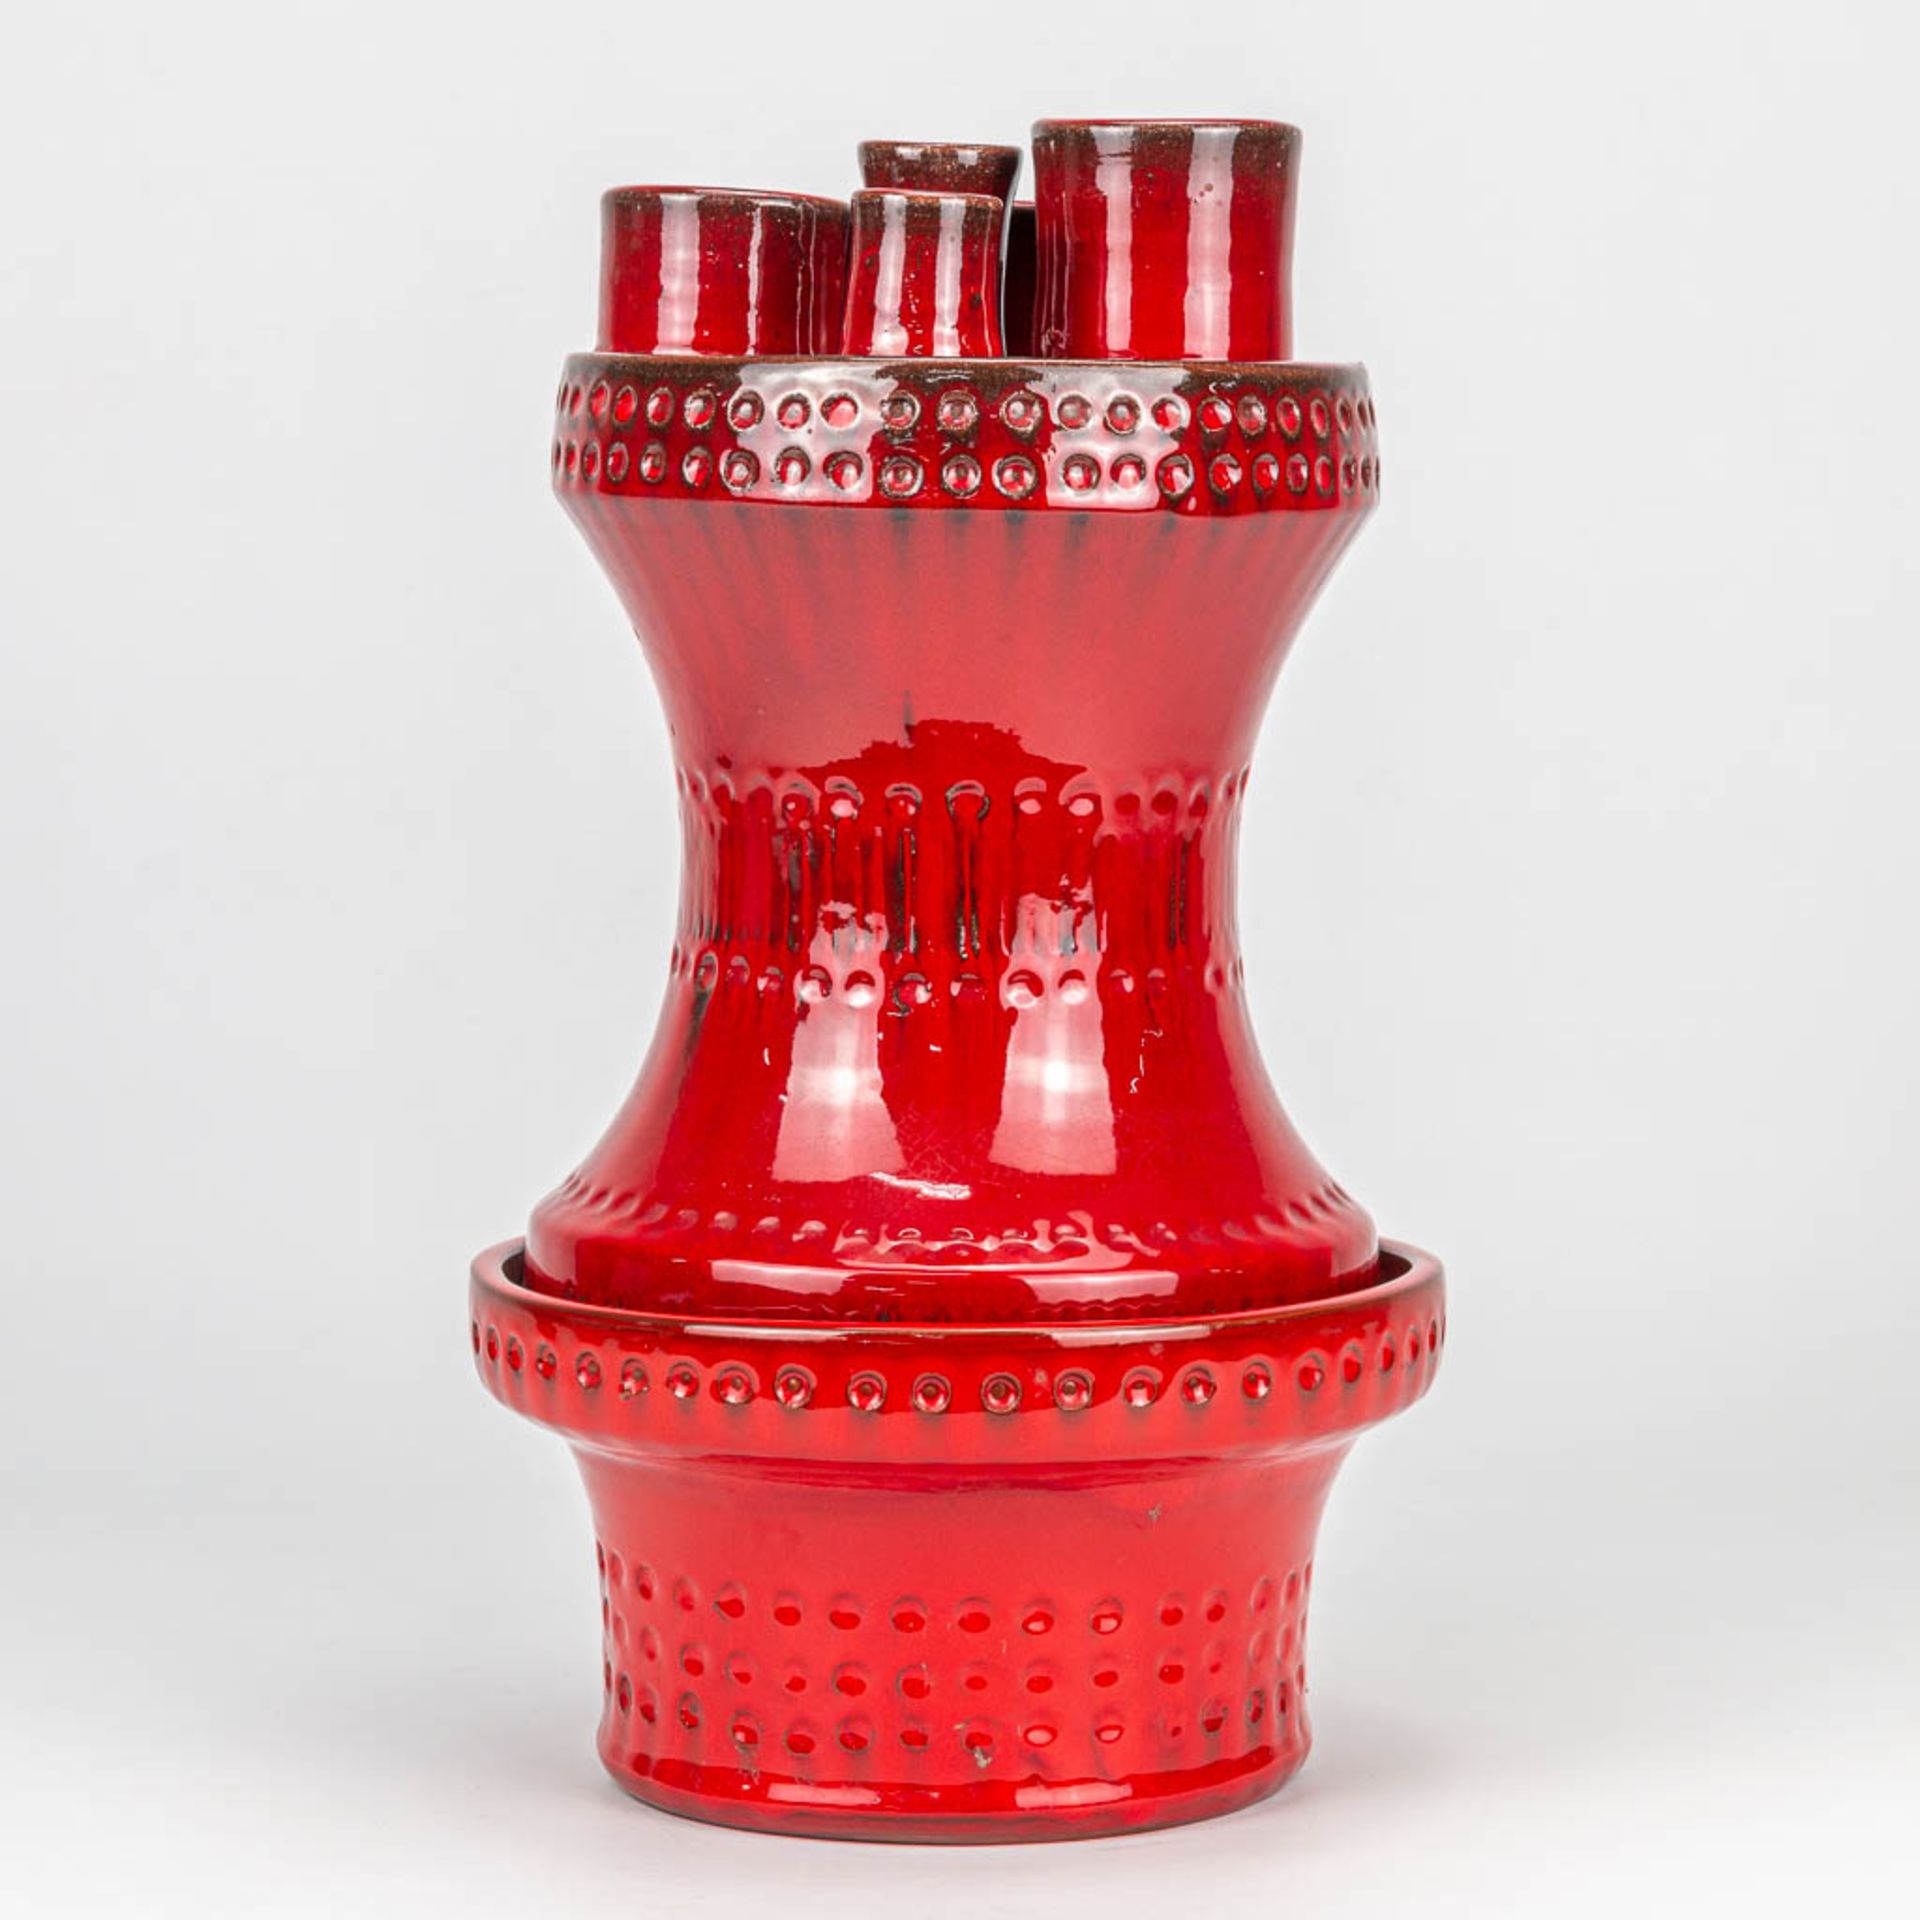 Leon GOOSSENS (XX) 'a Unique Piece' vase made of red glazed ceramics. (38 x 20 cm) - Image 3 of 8